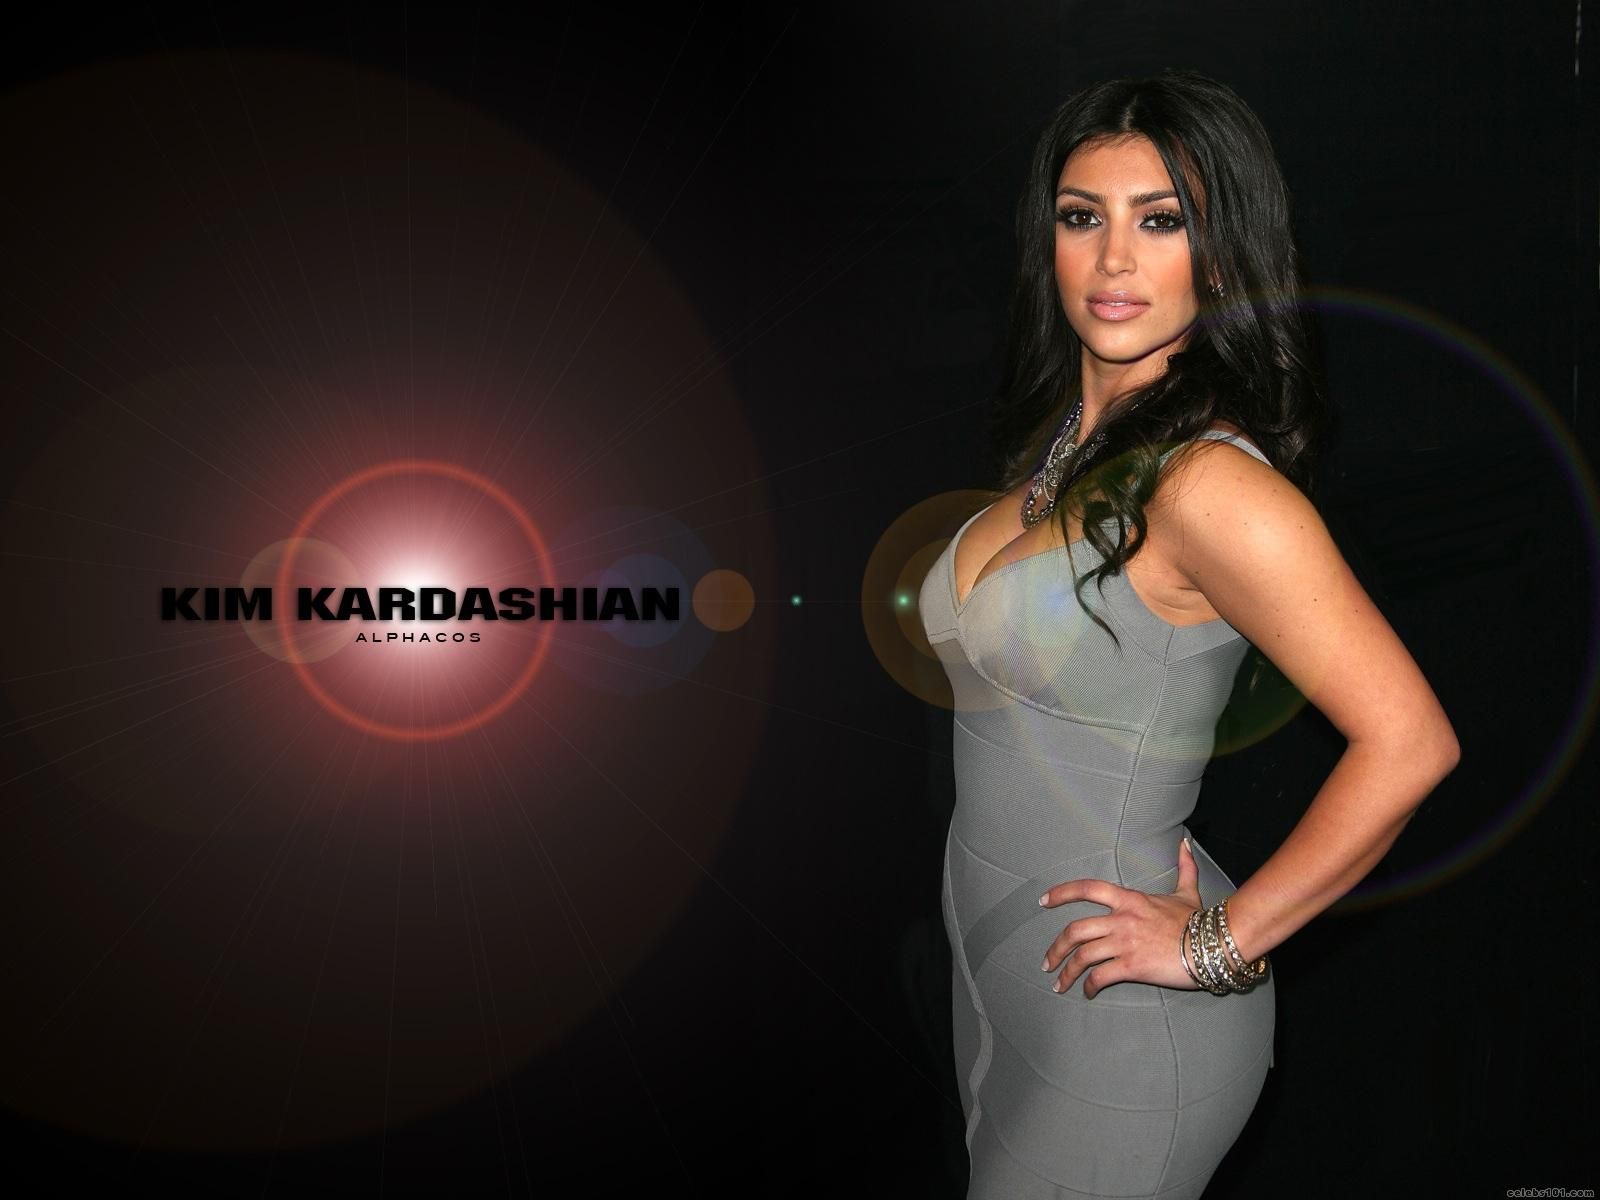 Kim Kardashian Background. Kim